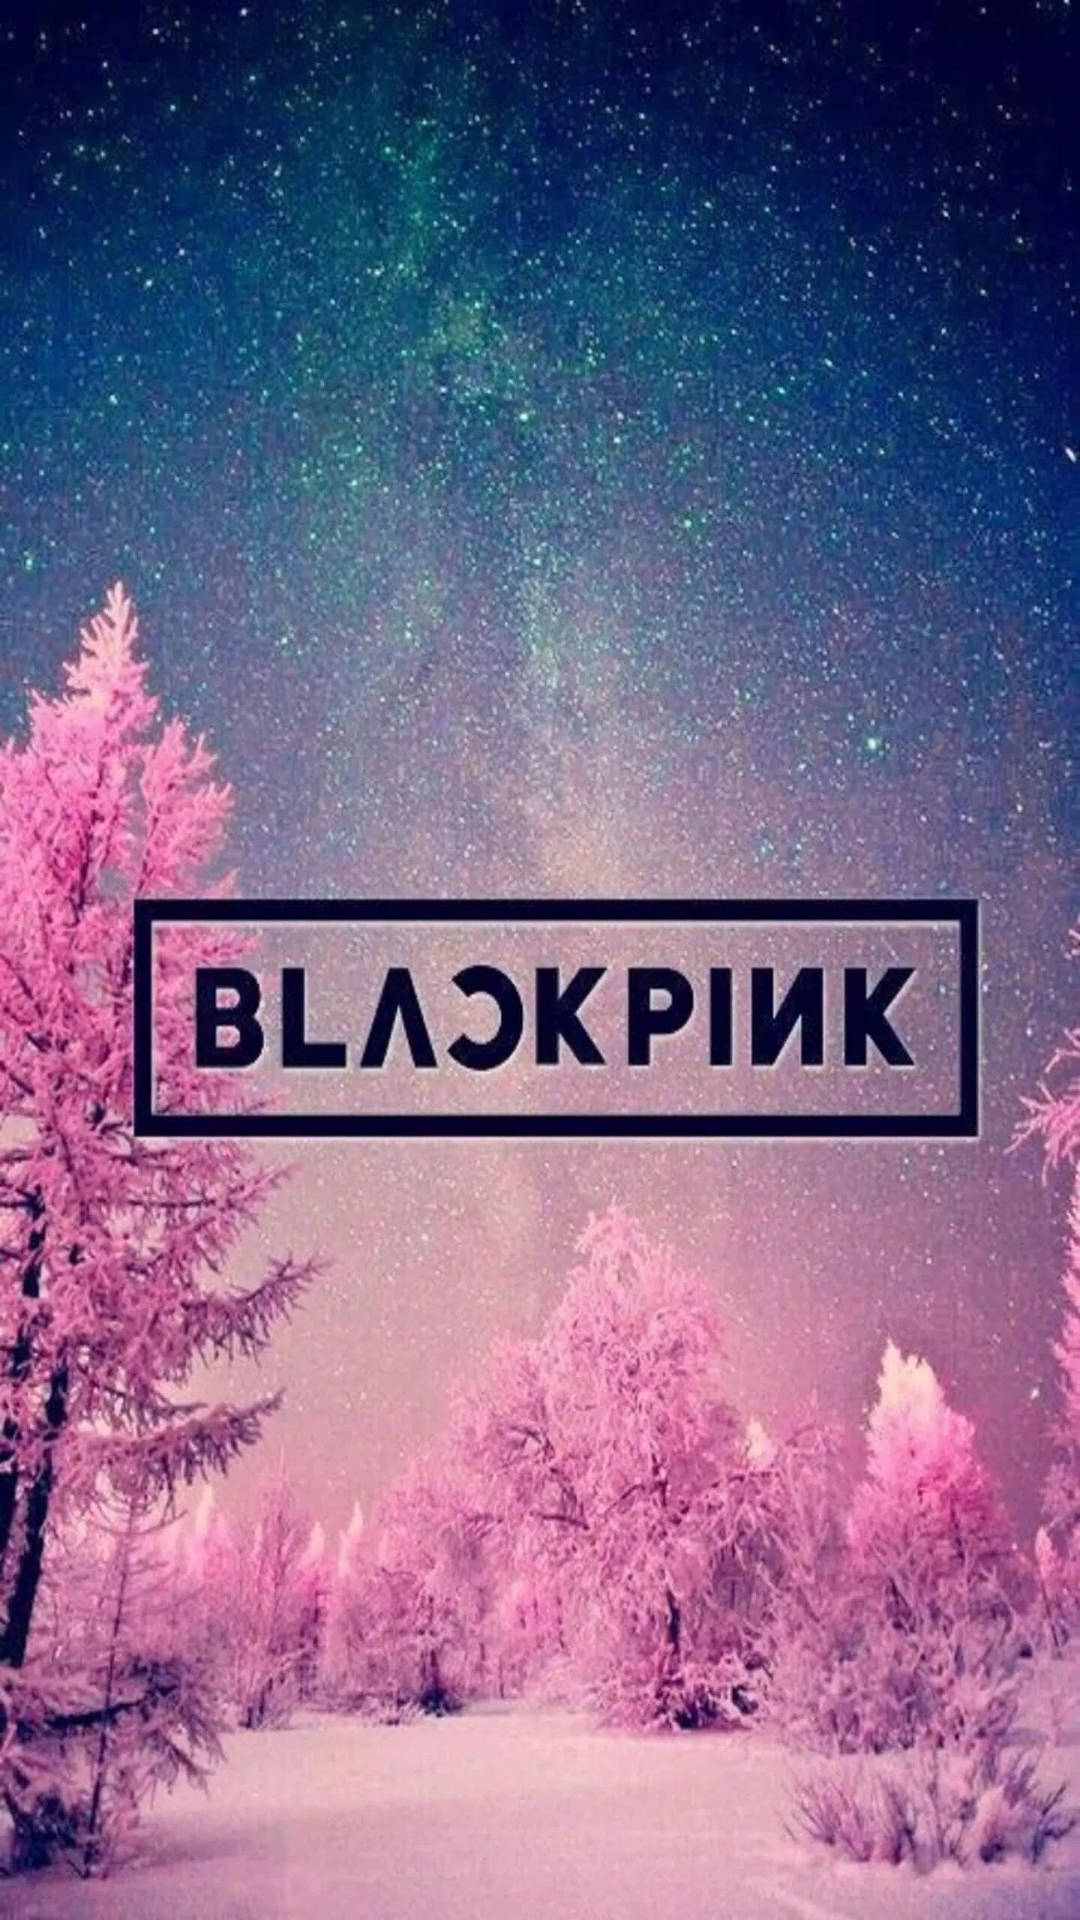 Blackpink Logo Over Pink Snowy Forest Wallpaper